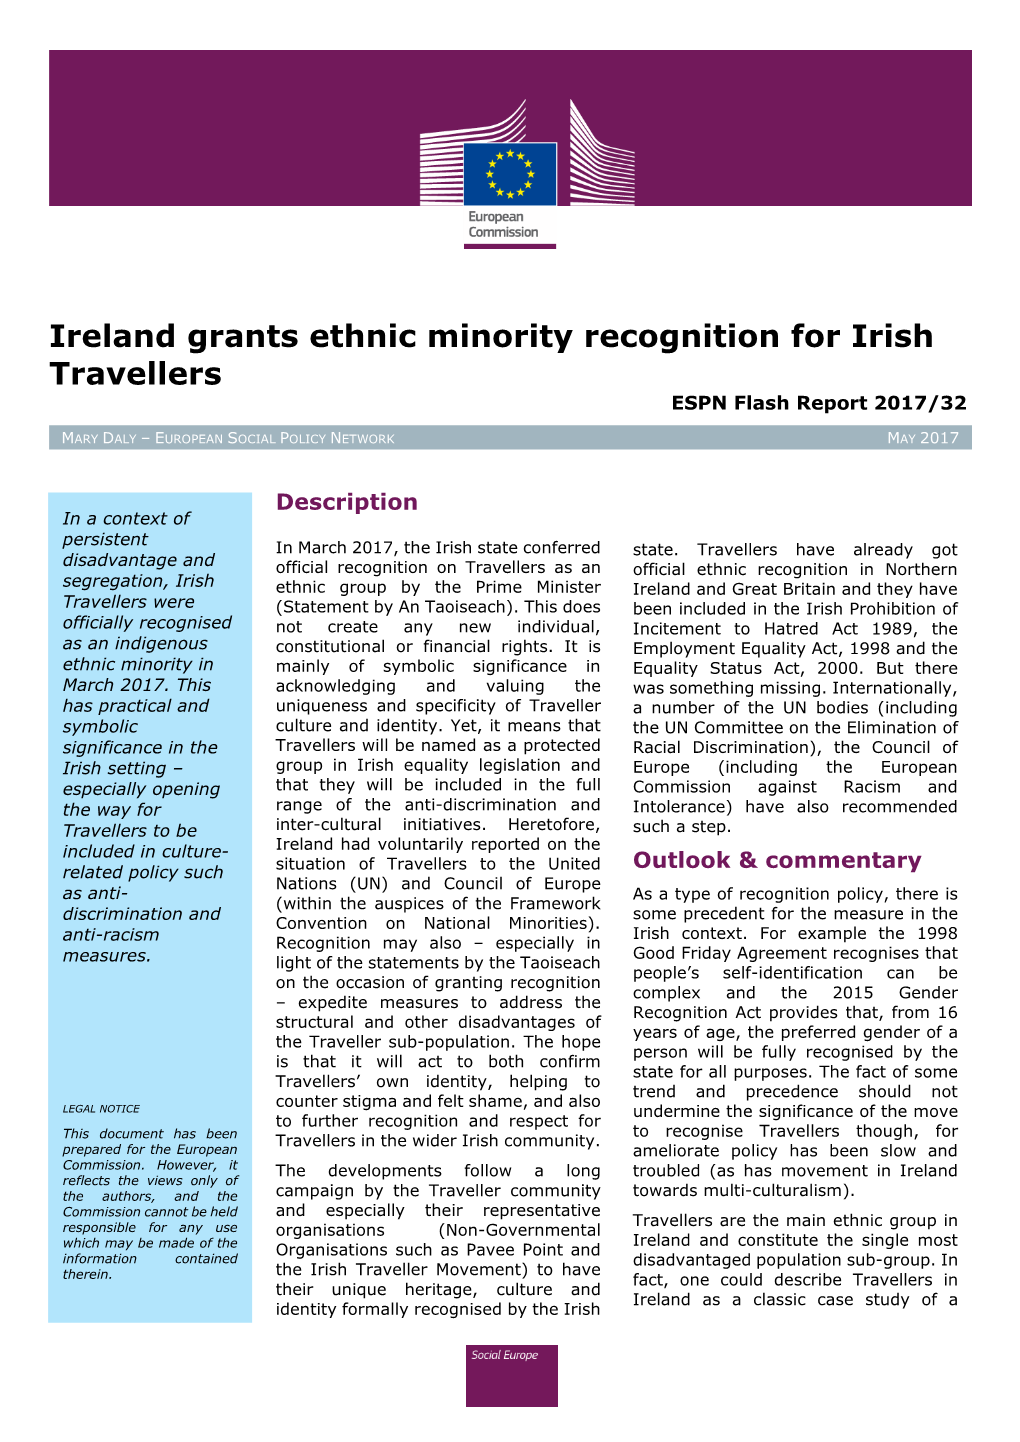 Ireland Grants Ethnic Minority Recognition for Irish Travellers ESPN Flash Report 2017/32